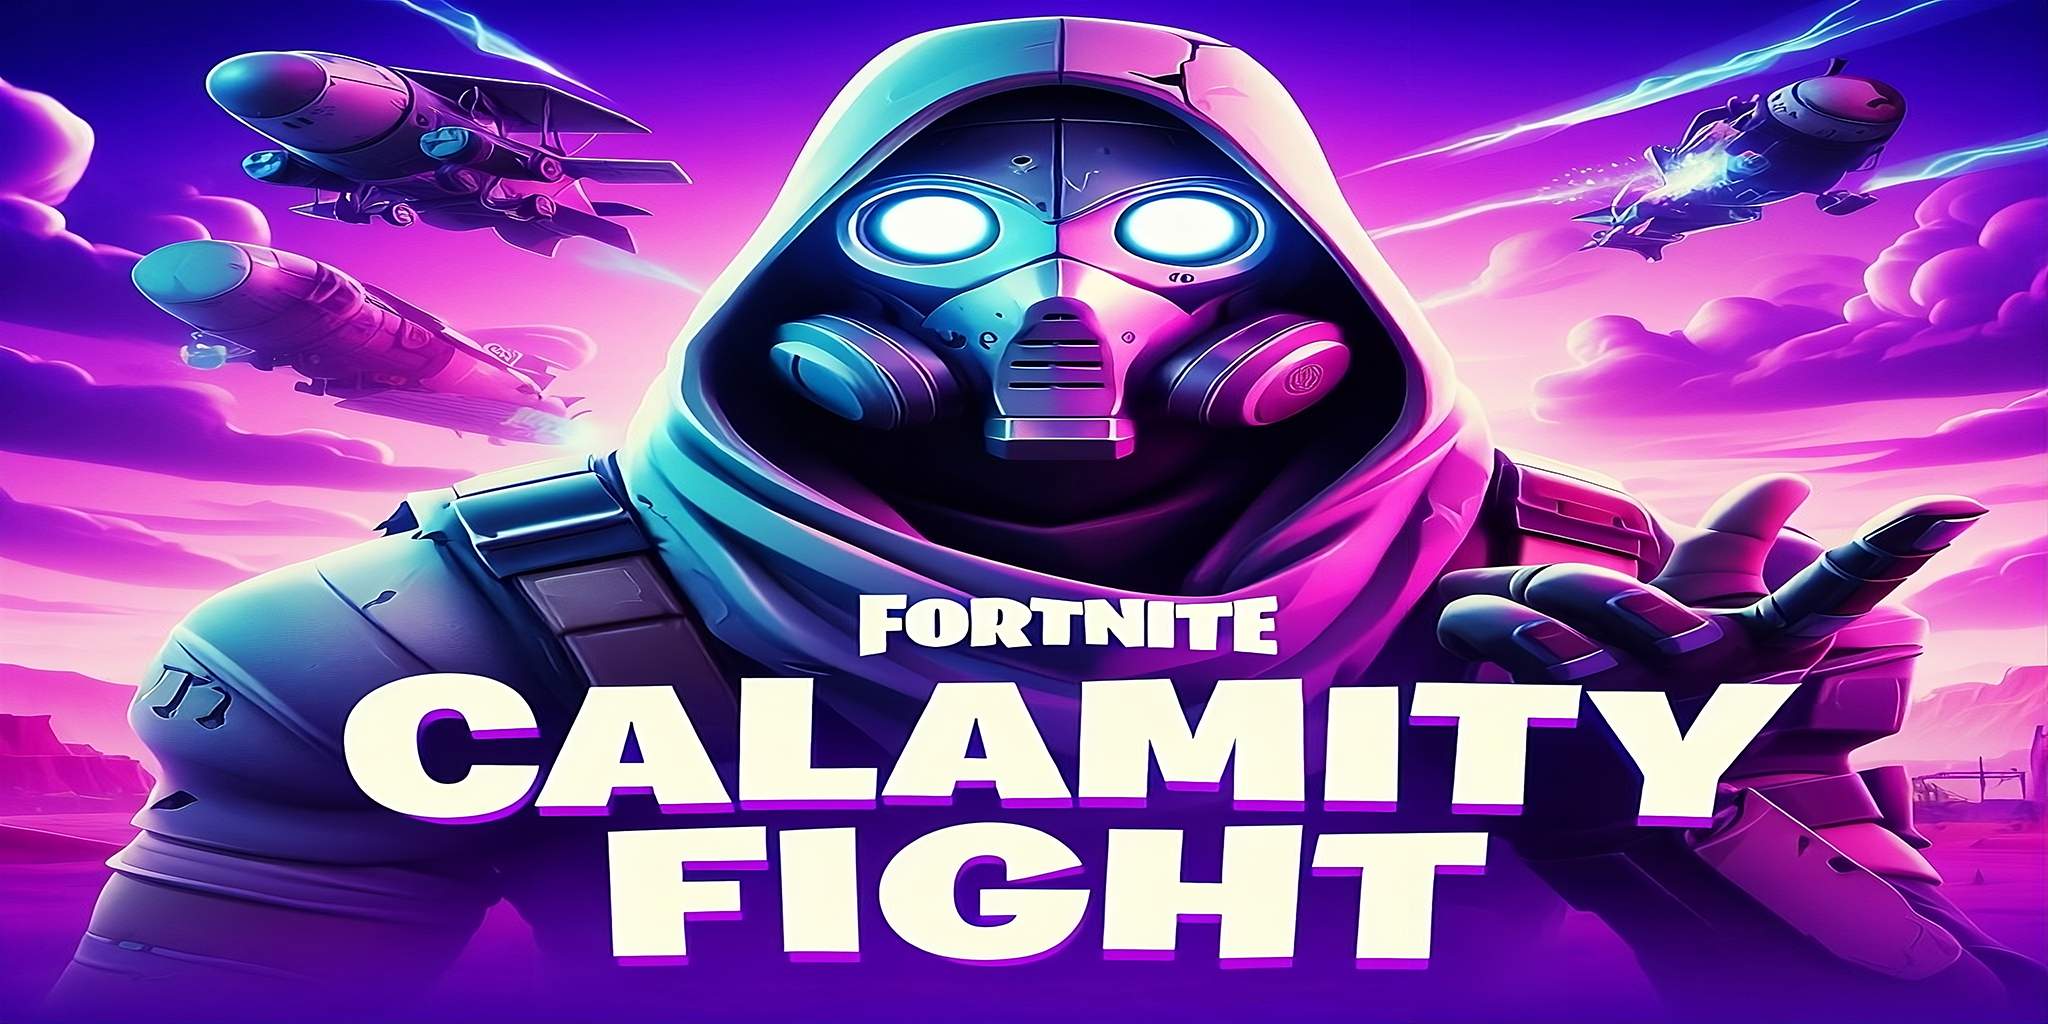 CALAMITY FIGHT